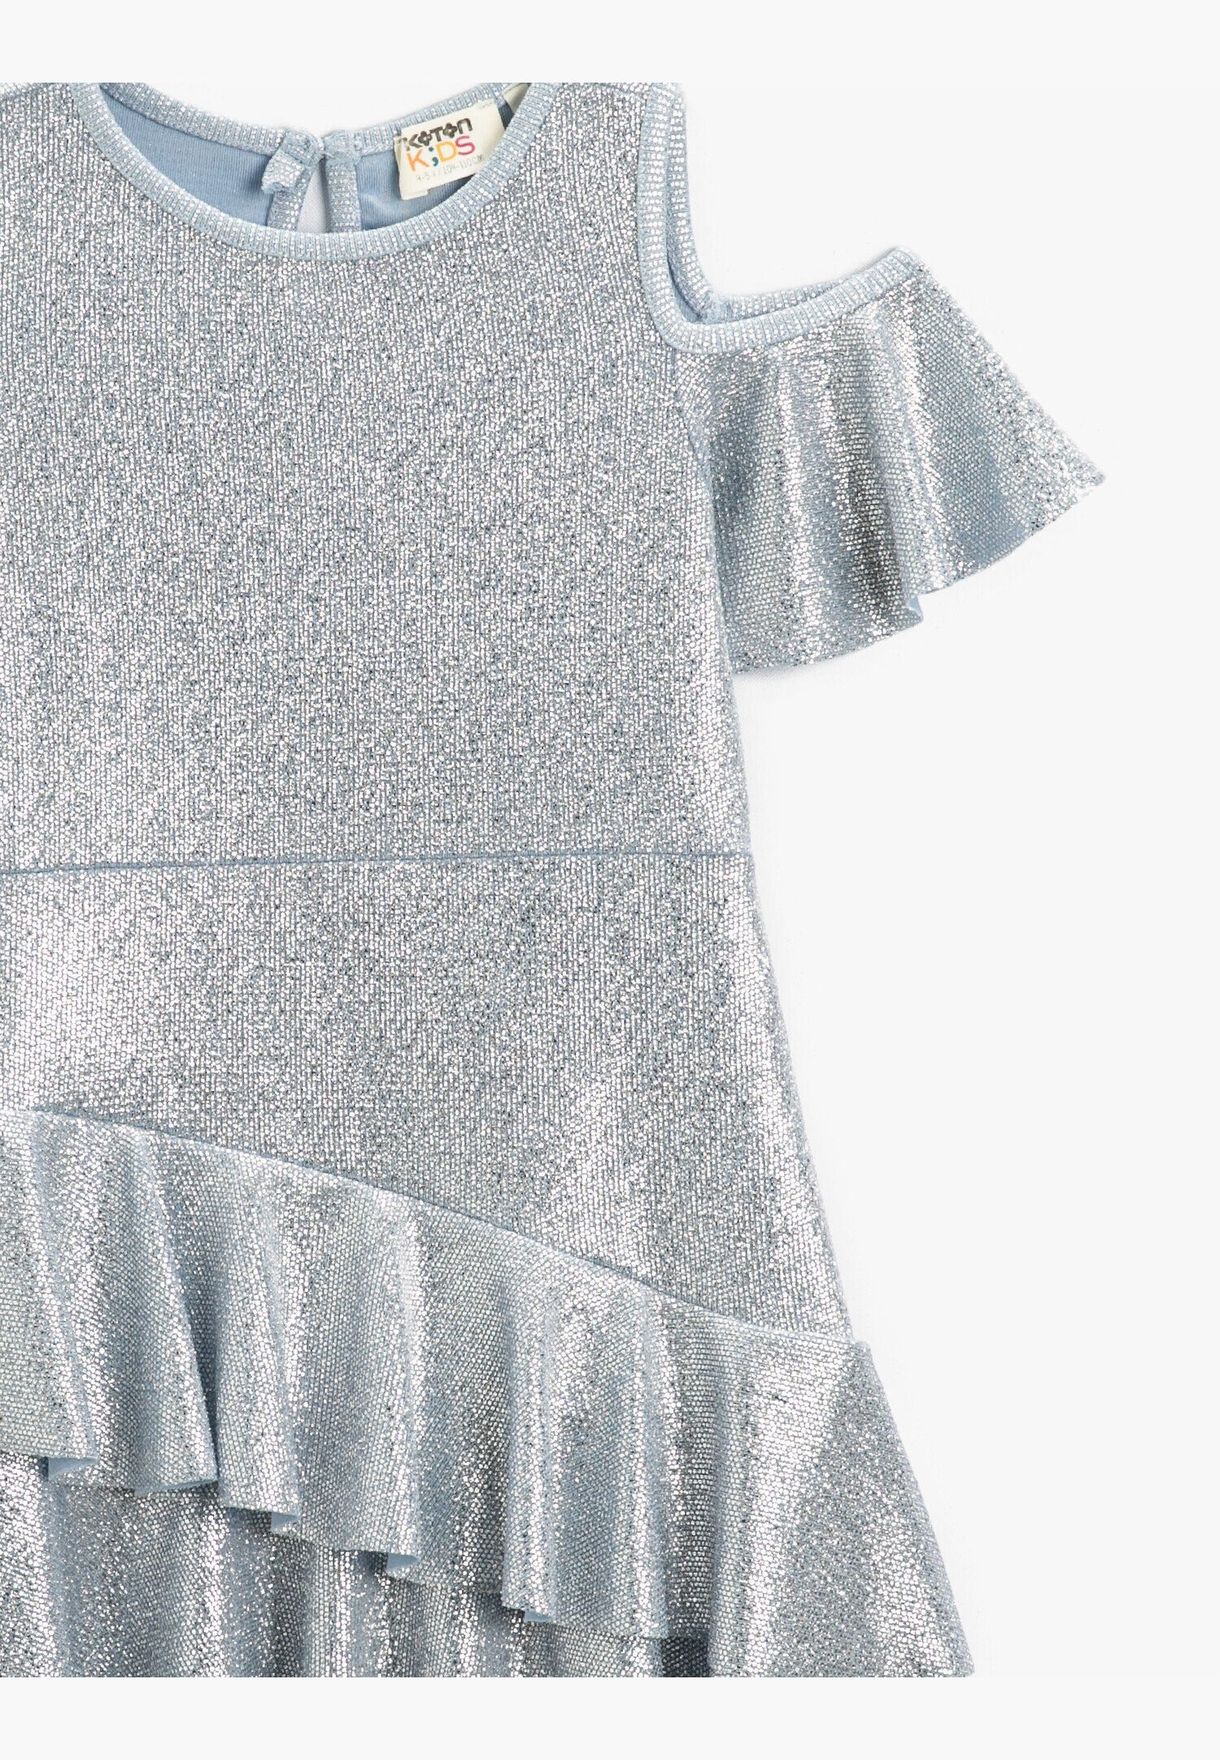 Shiny Ruffle Dress Cut Out Detail